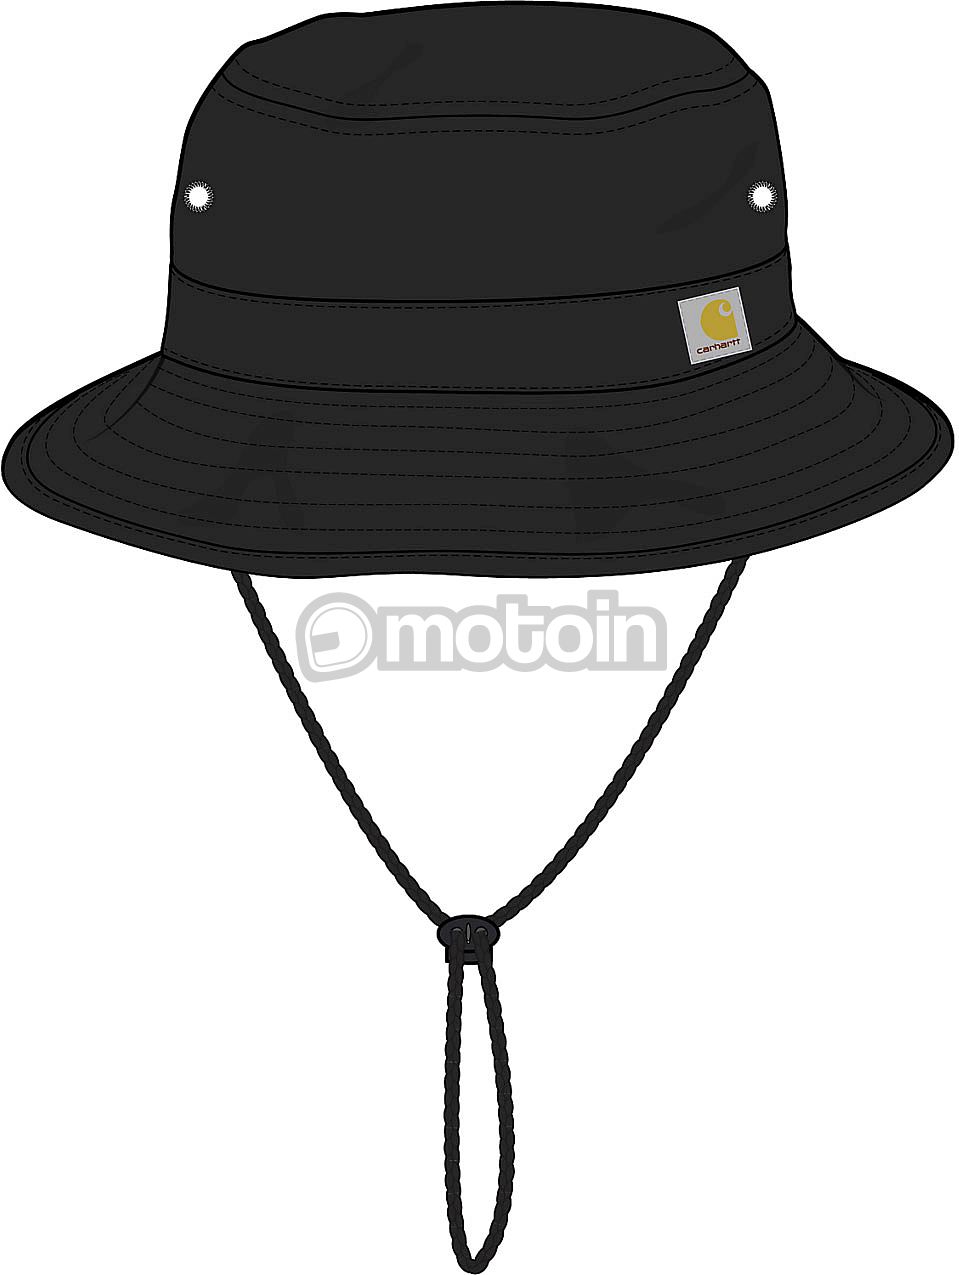 Carhartt Fishing Hat